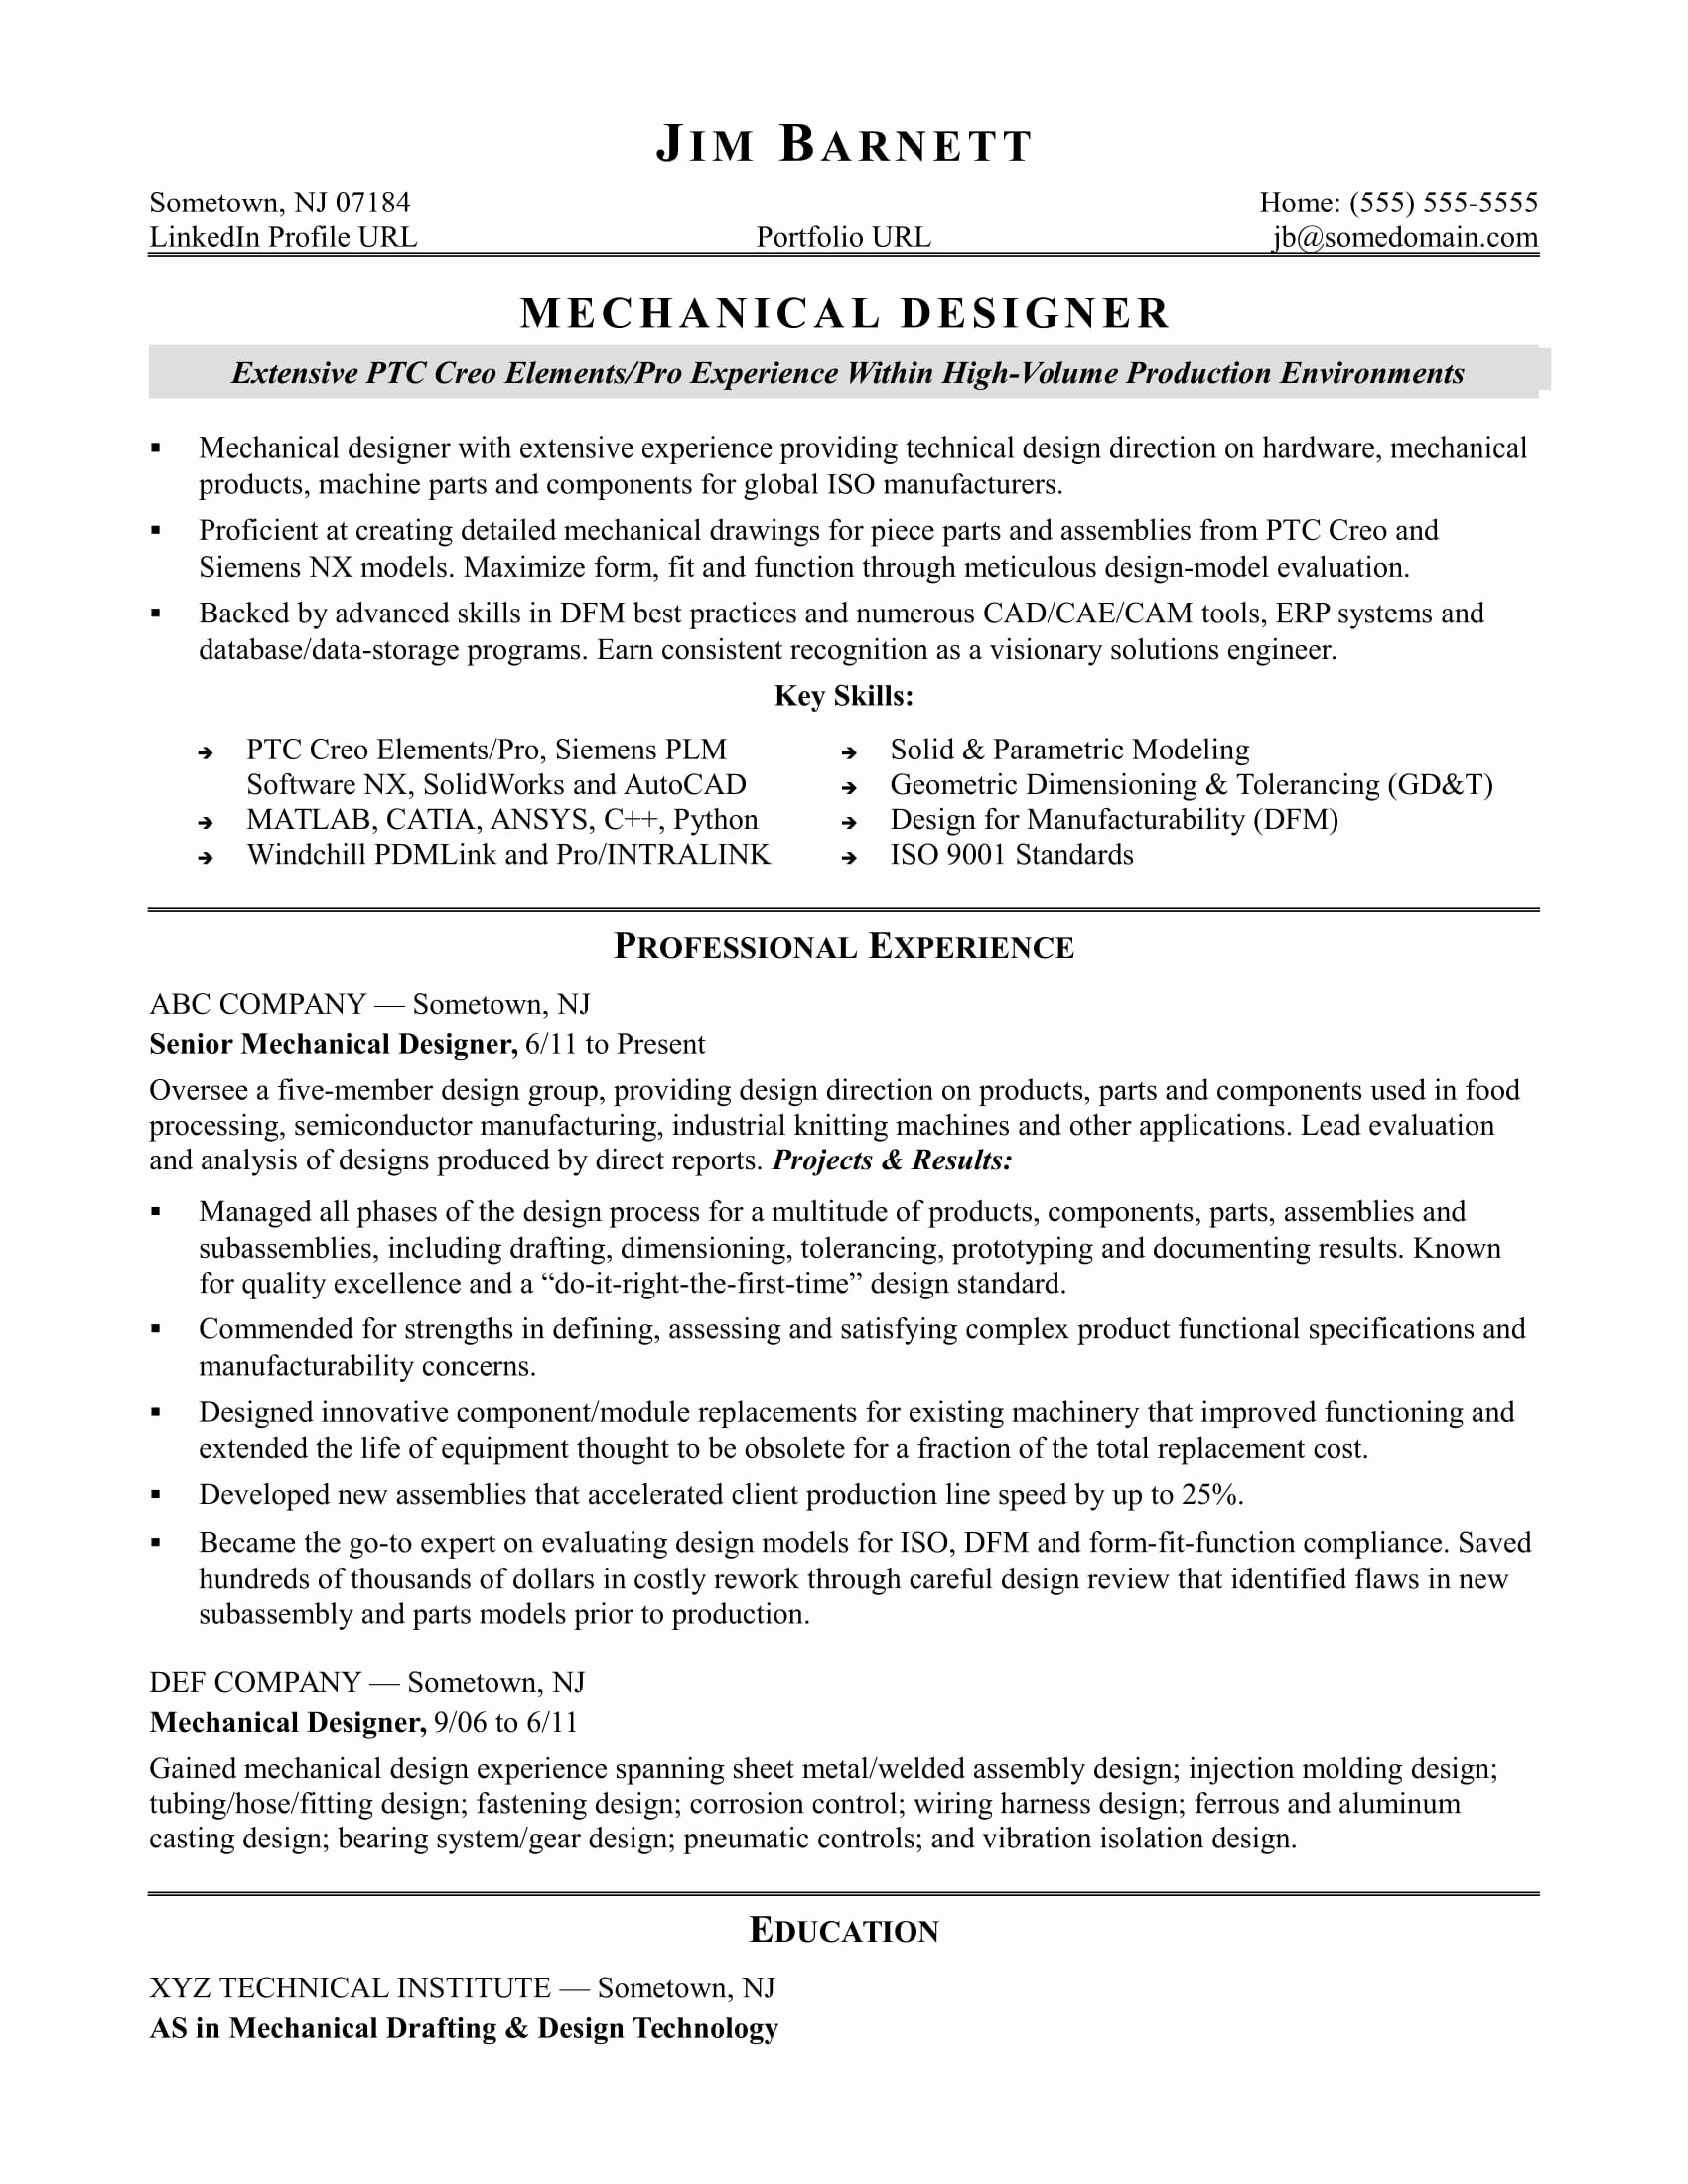 Sample Resume for An Experienced Mechanical Designer